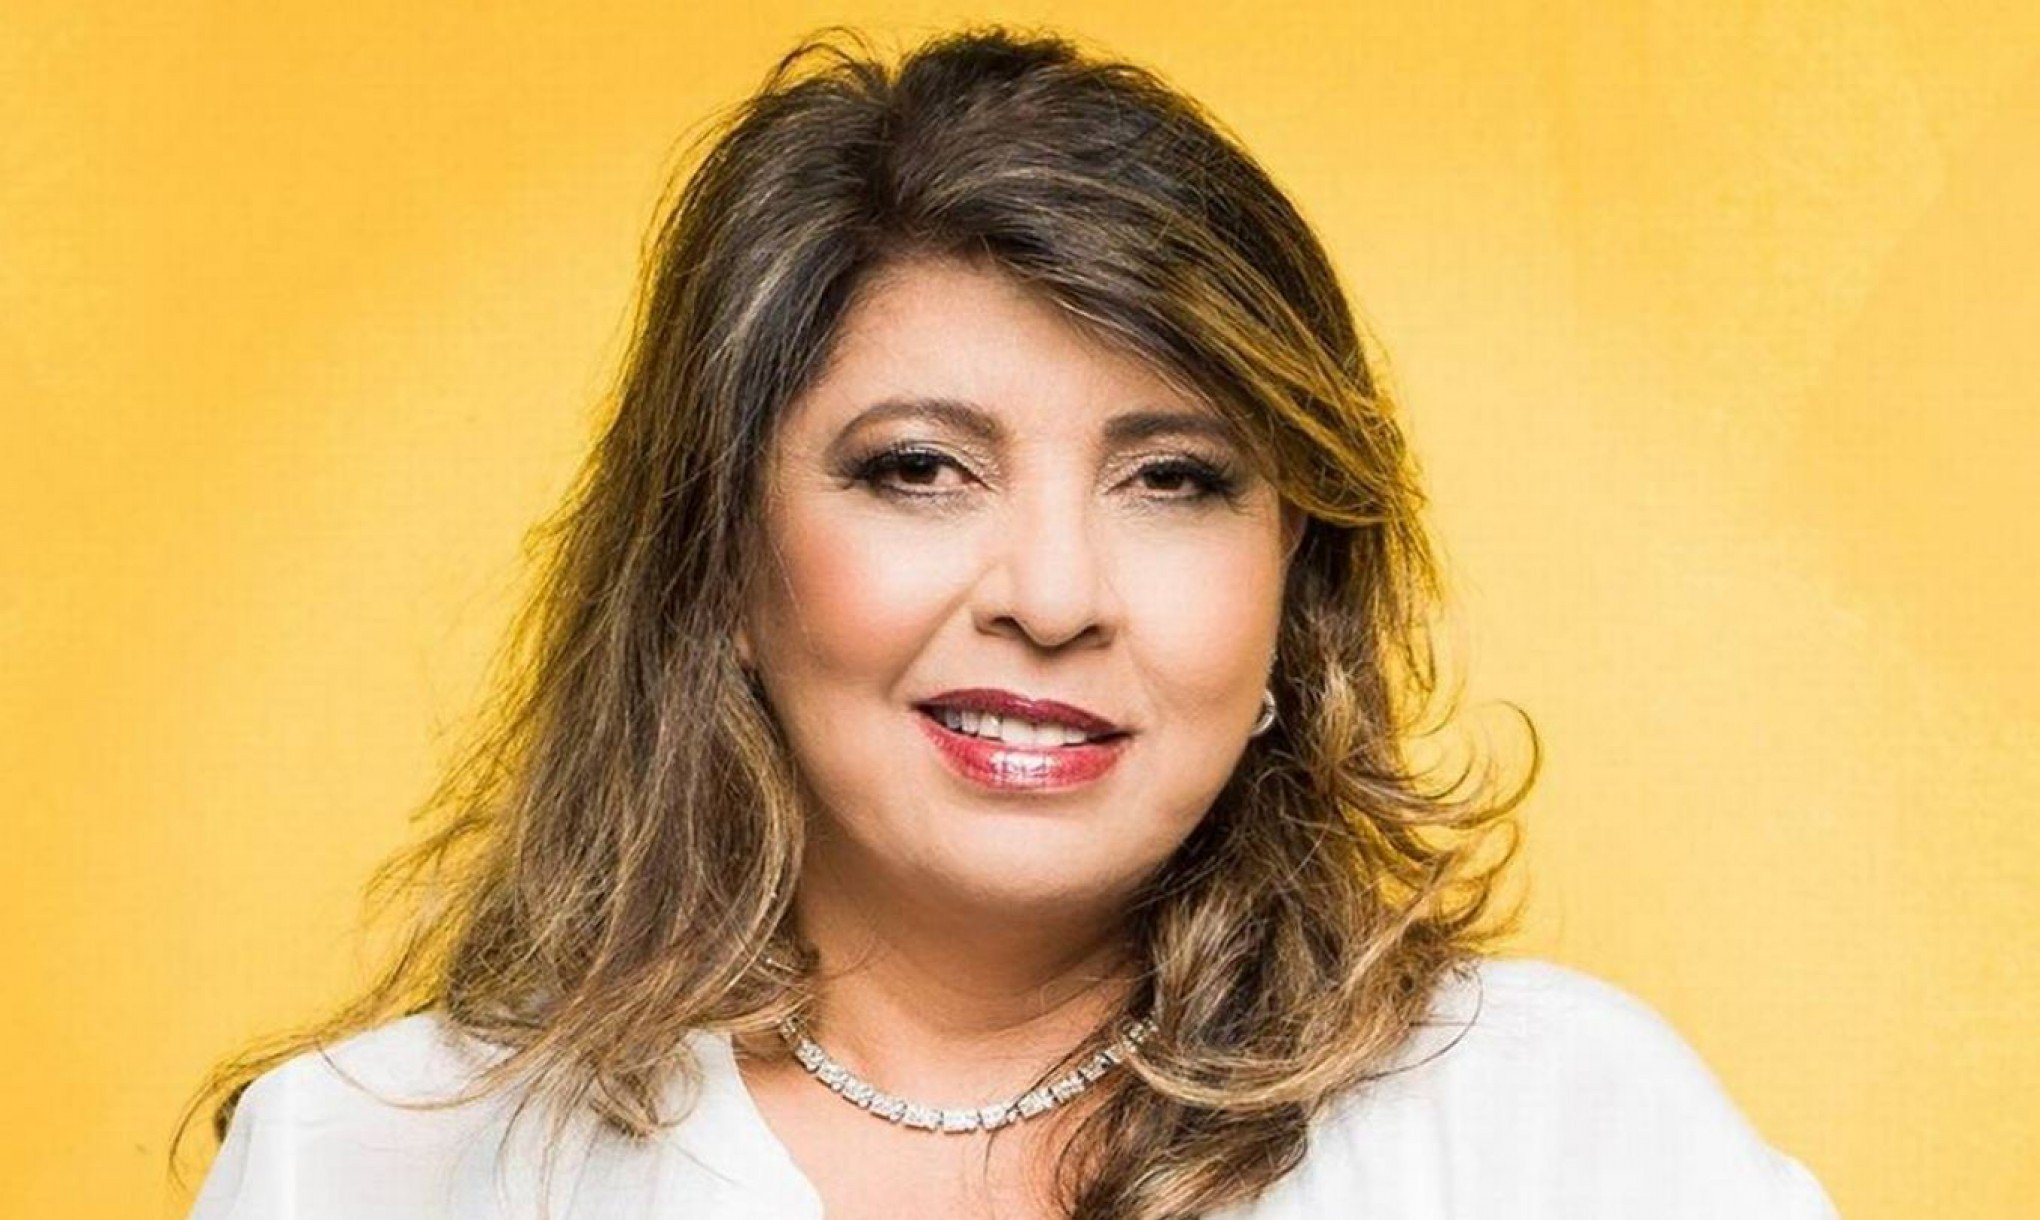 PERIGOSA E LINDA: Roberta Miranda canta sucesso de banda gaúcha em programa da TV Globo